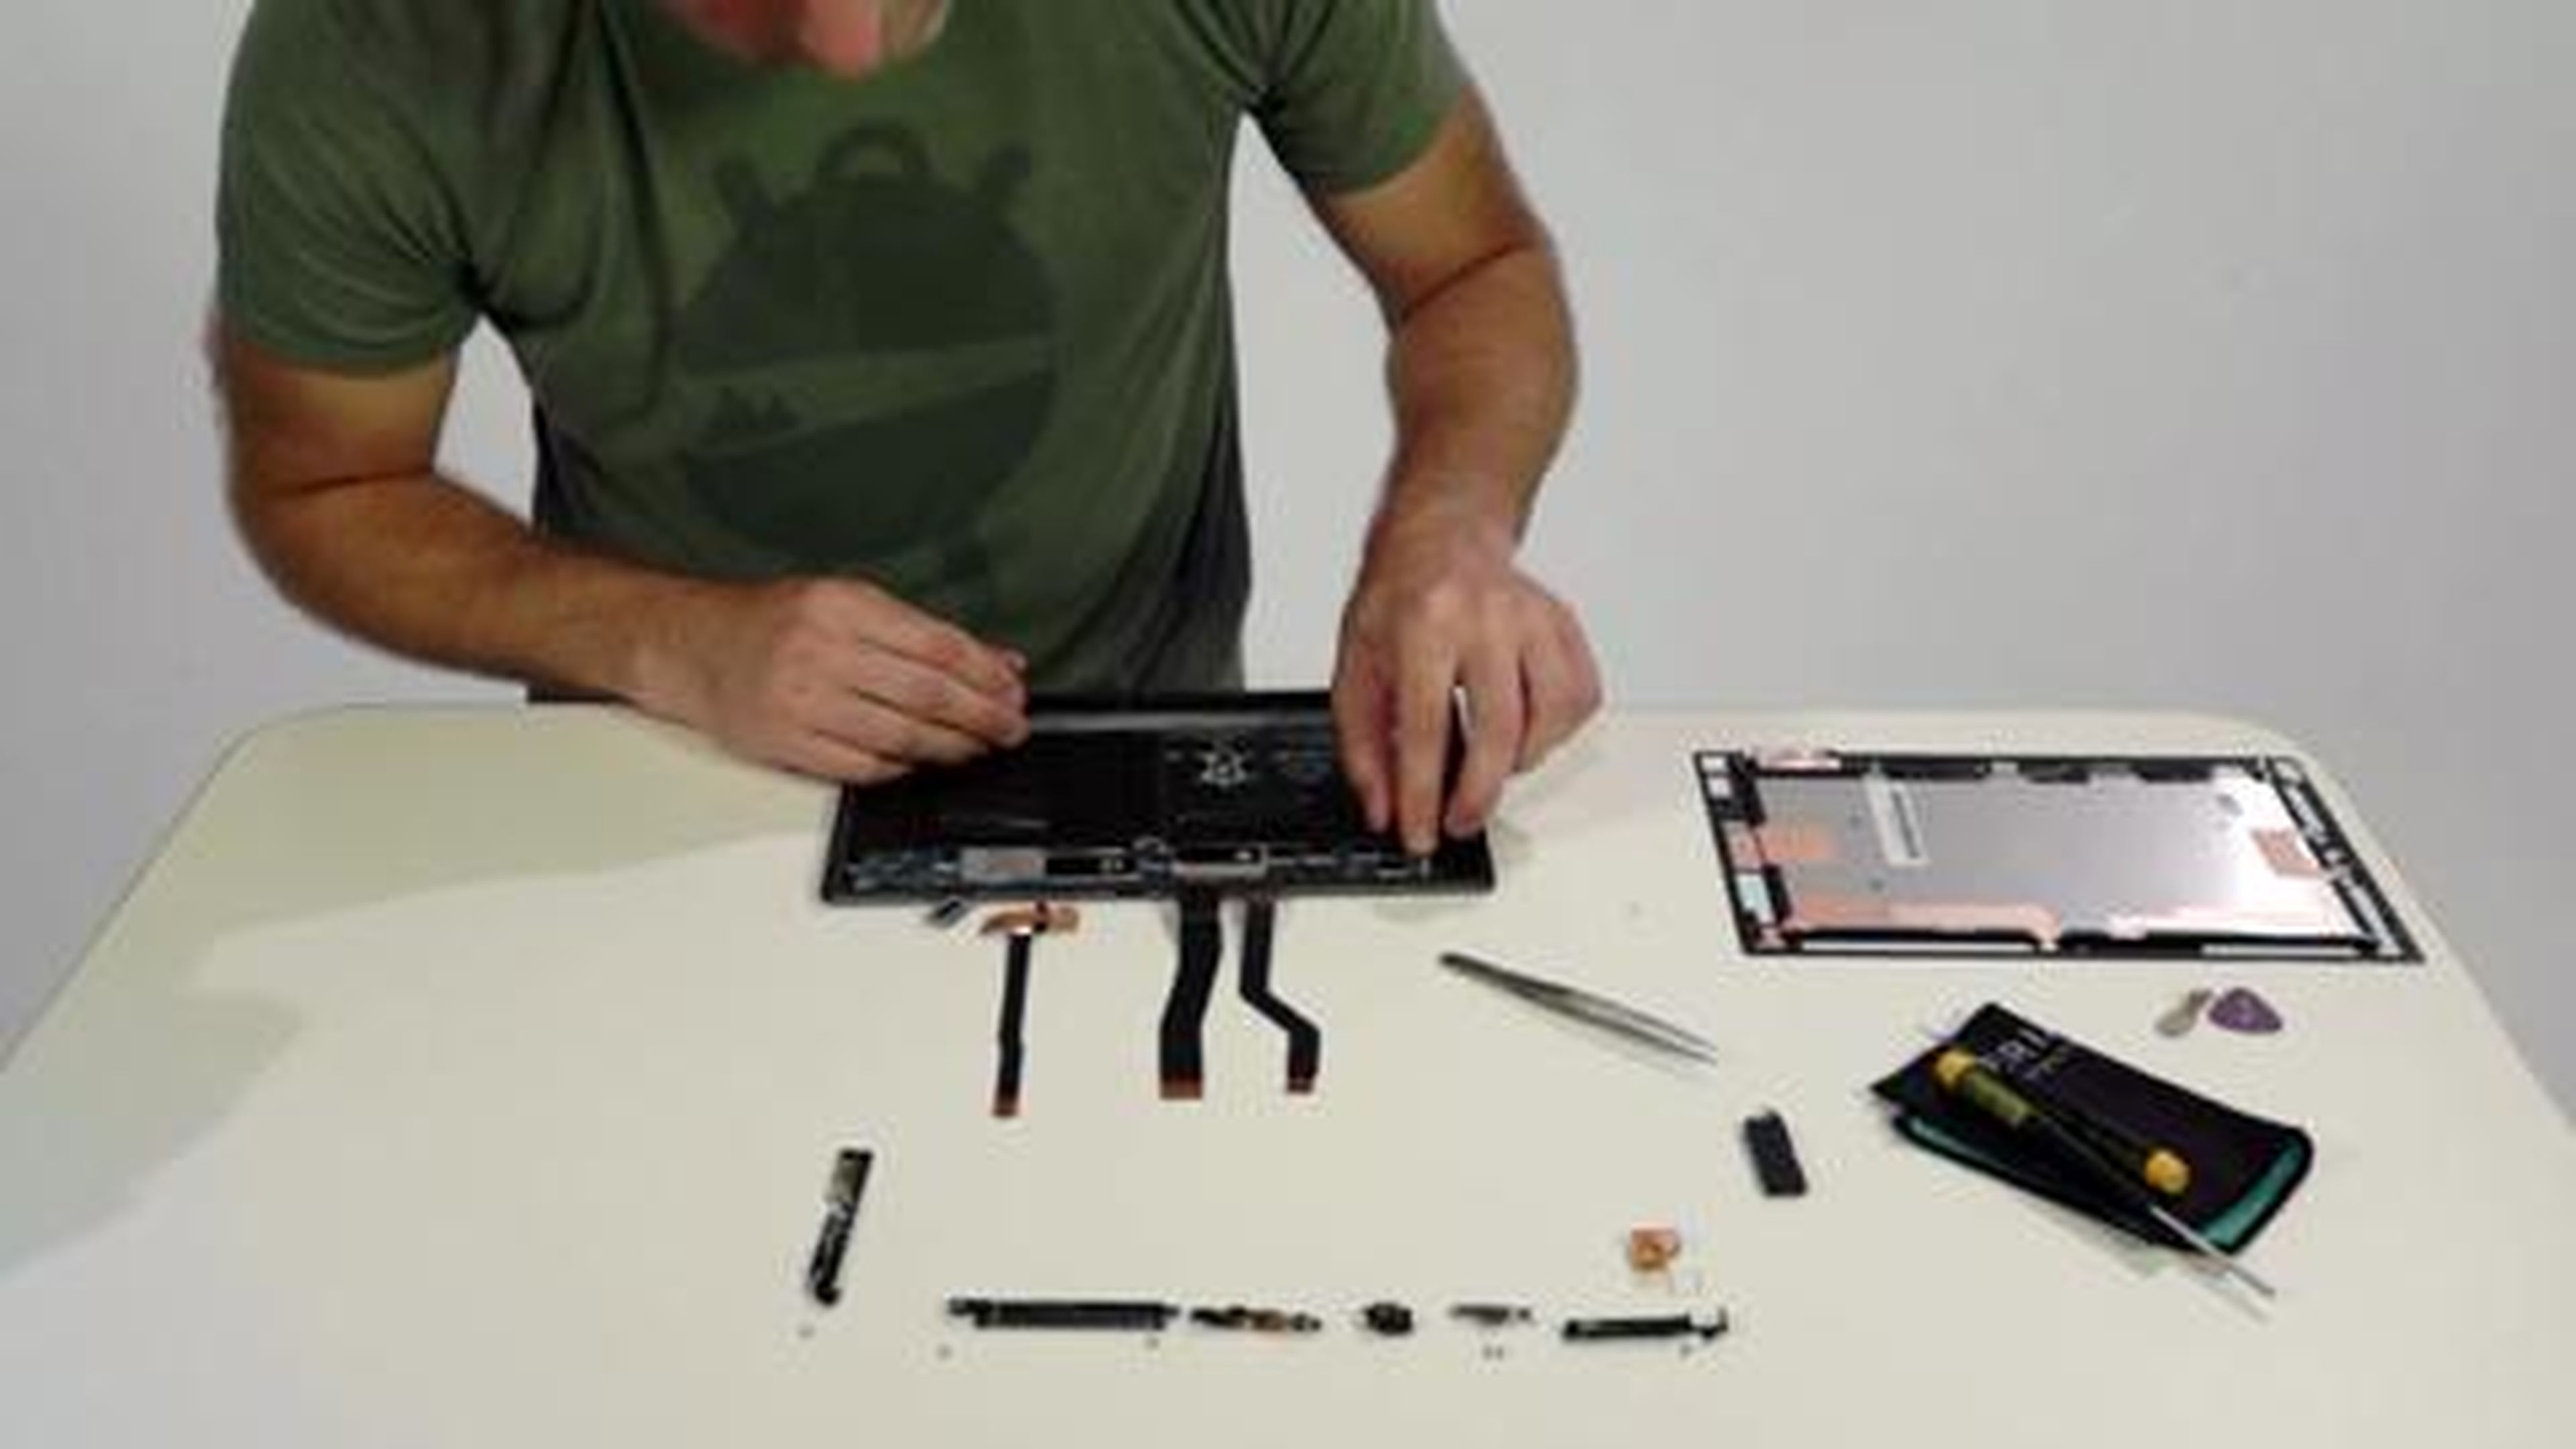 Sony Xperia Z2 Tablet Build Up